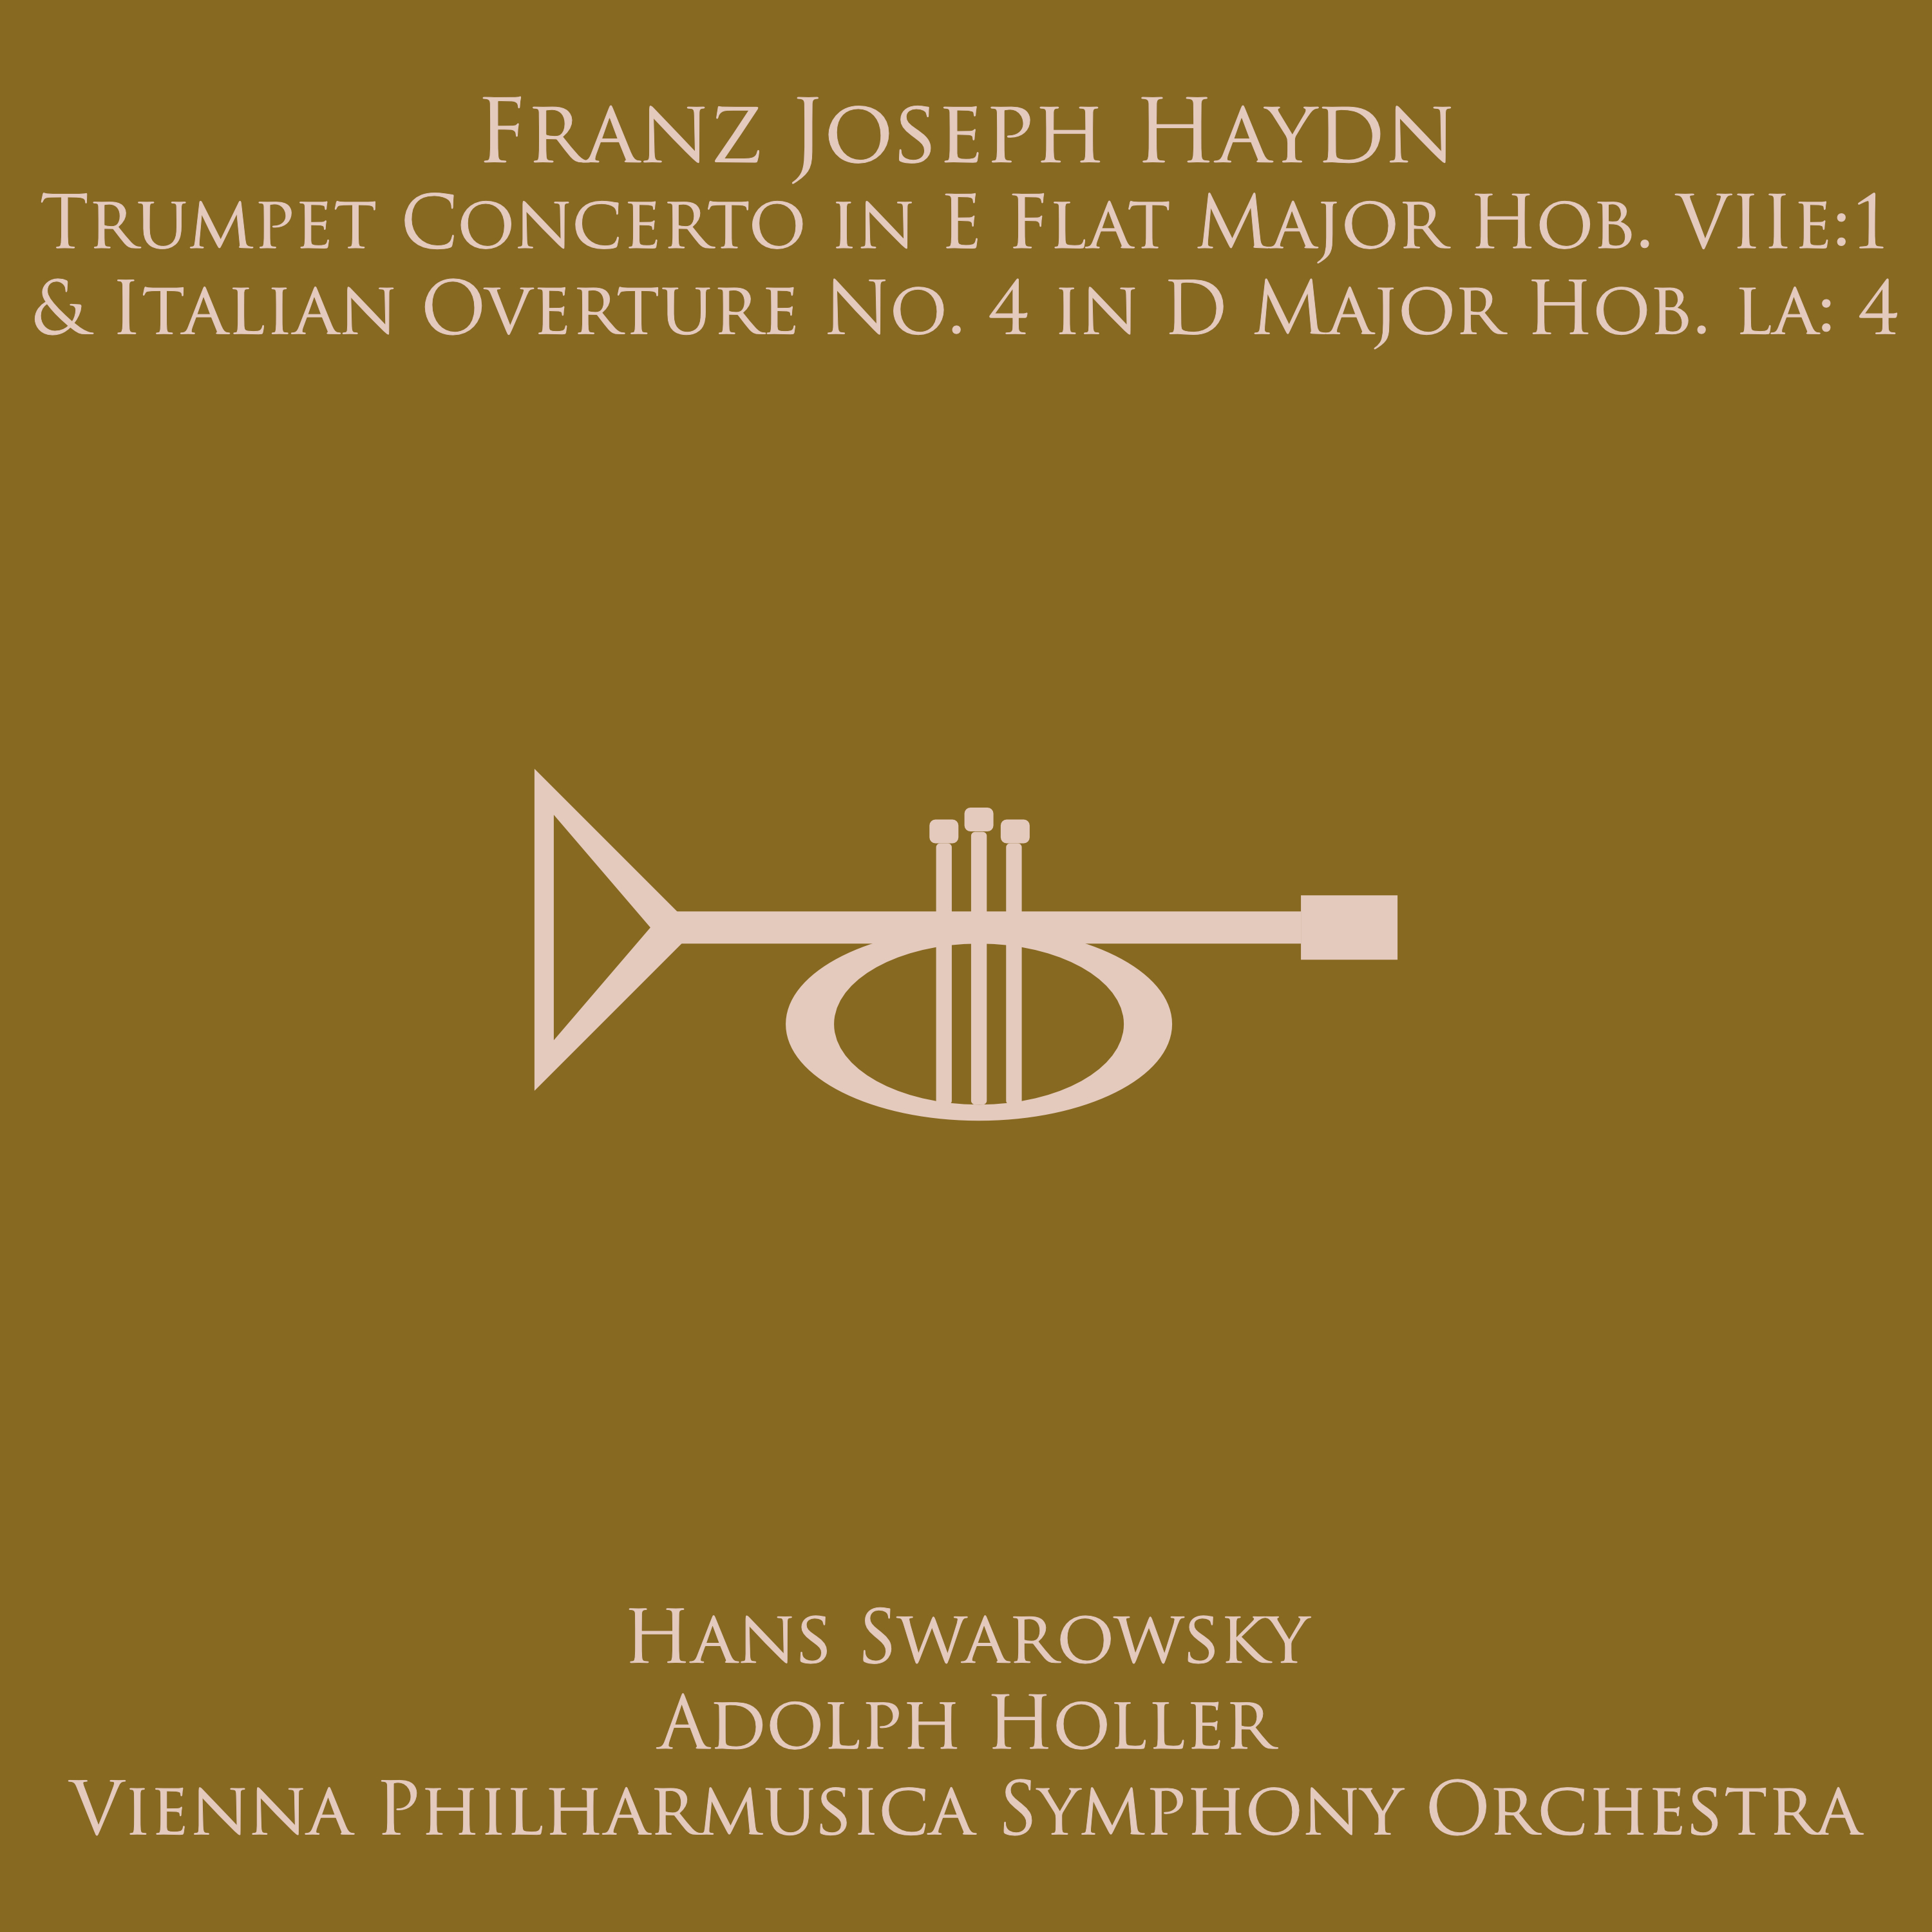 Trumpet Concerto in E Flat Major, Hob. VIIe:1: III. Allegro